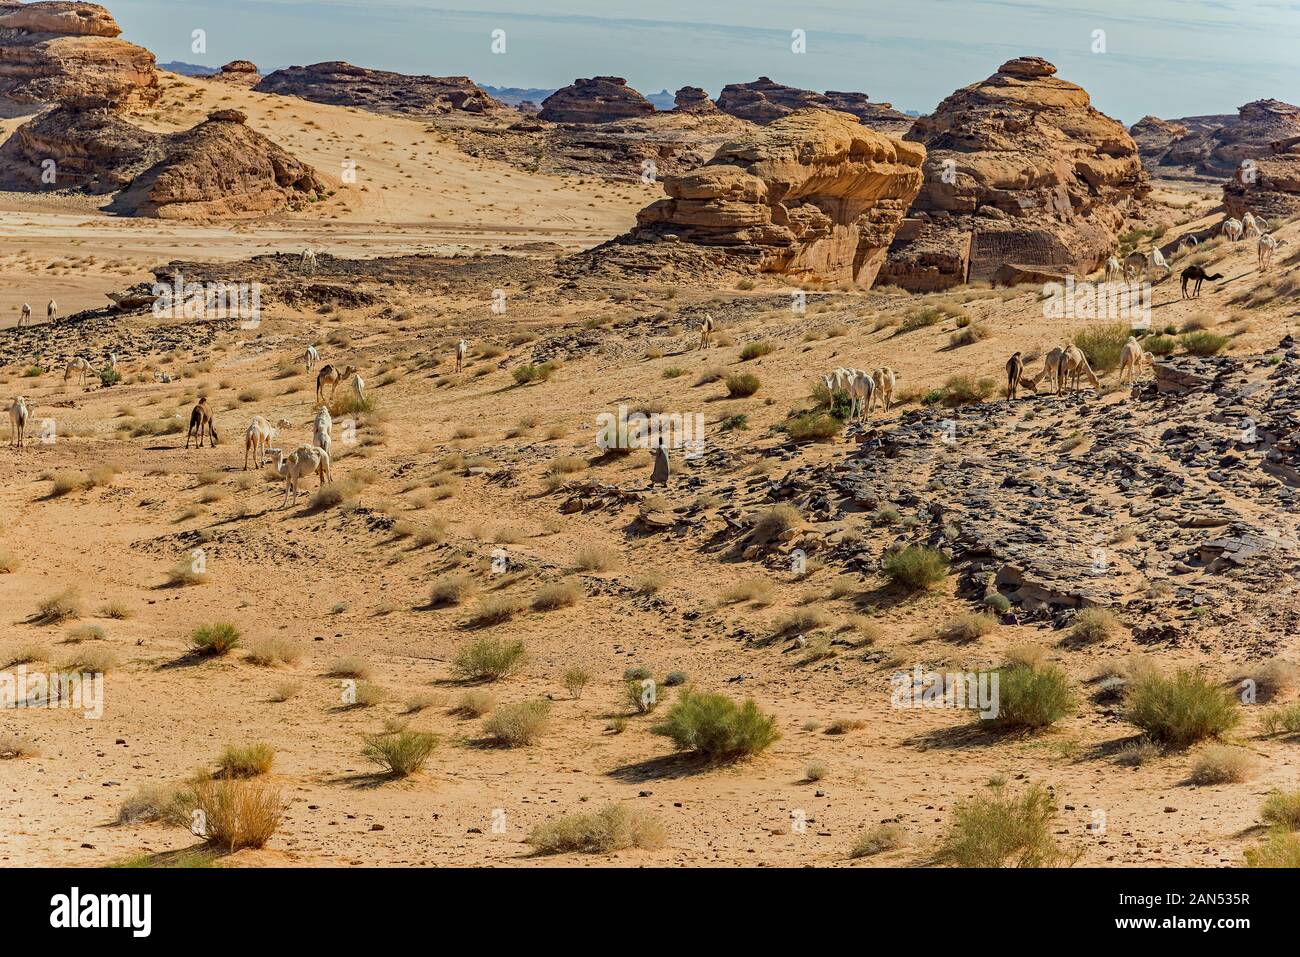 Kamelherd-Szene in der Wüste Stockfoto